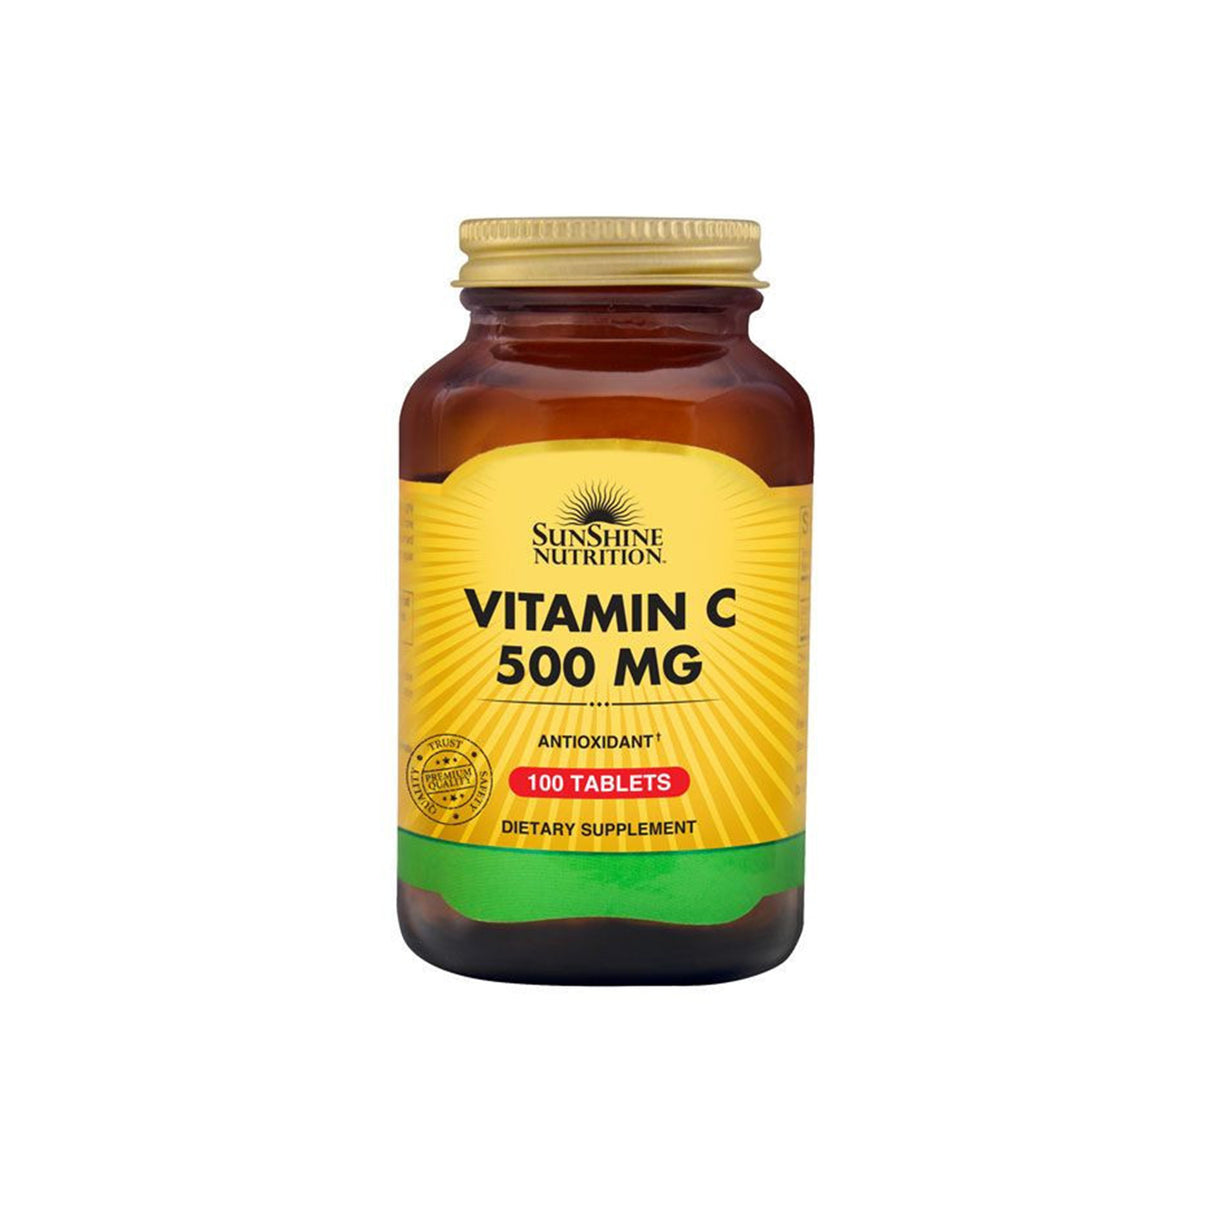 Sunshine Nutrition Vitamin C 500mg 100 Tablets